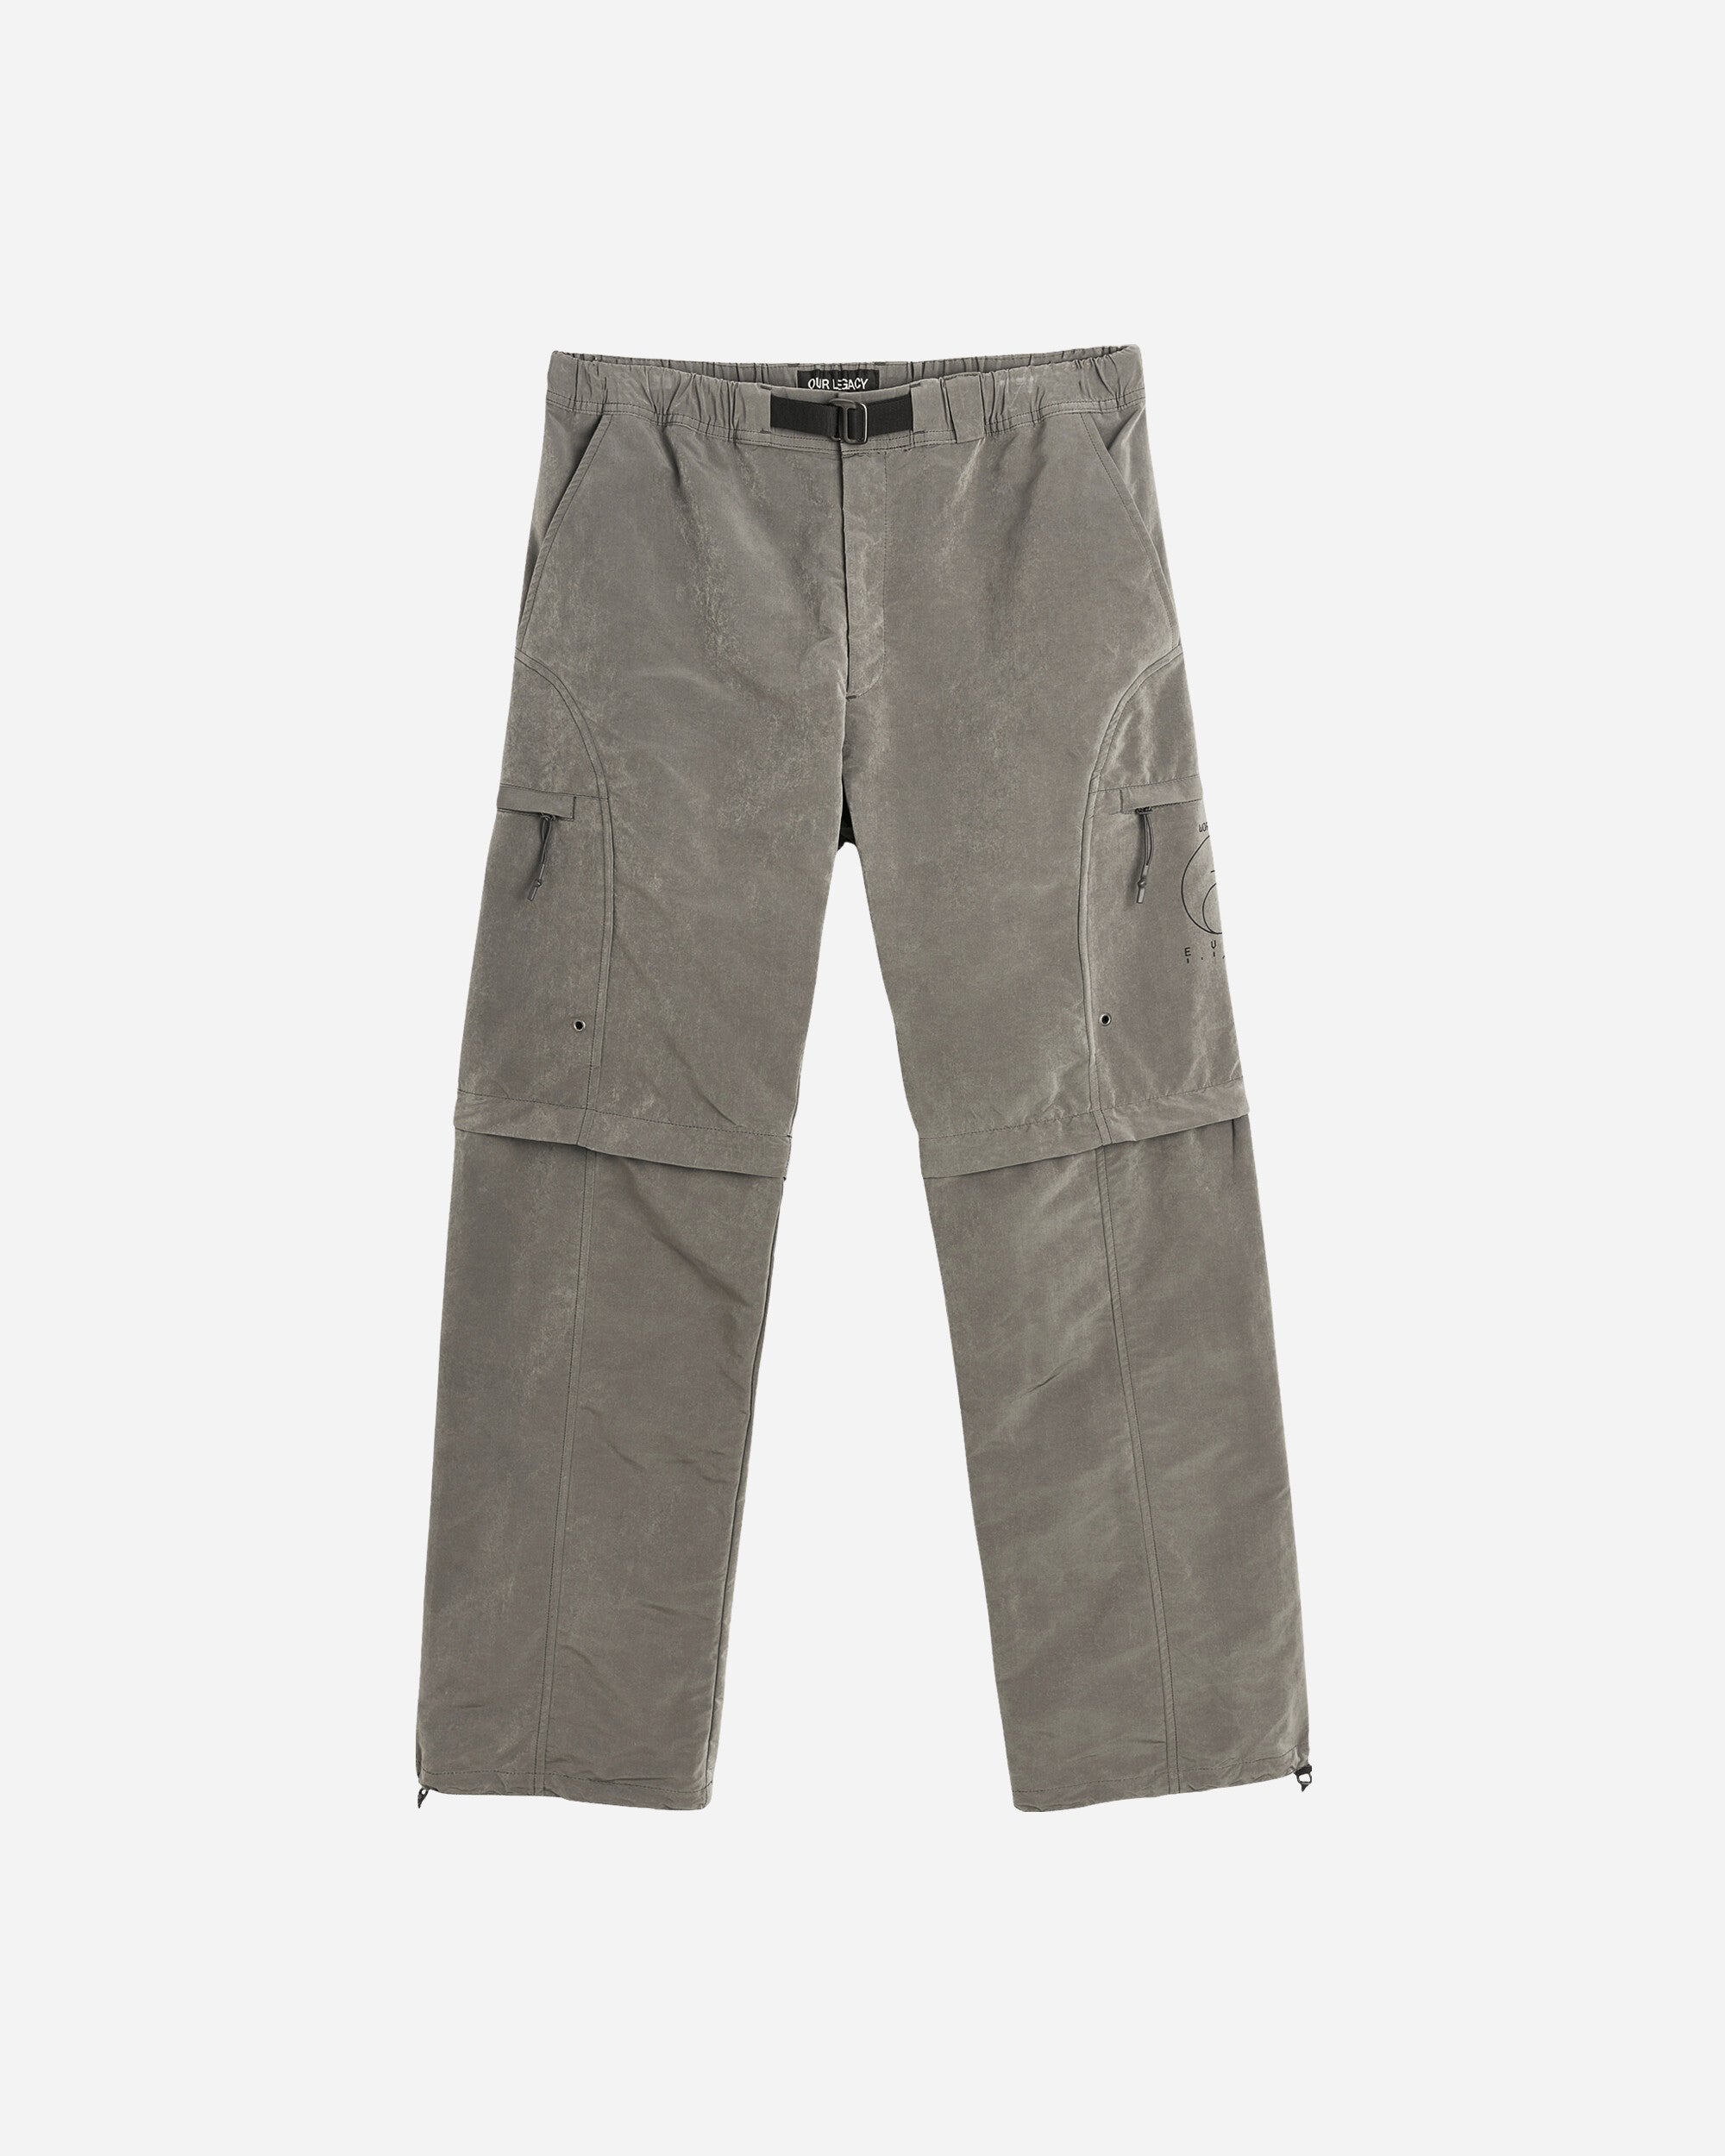 WORK SHOP EVAC Quartz Cargo Pants Schist Grey